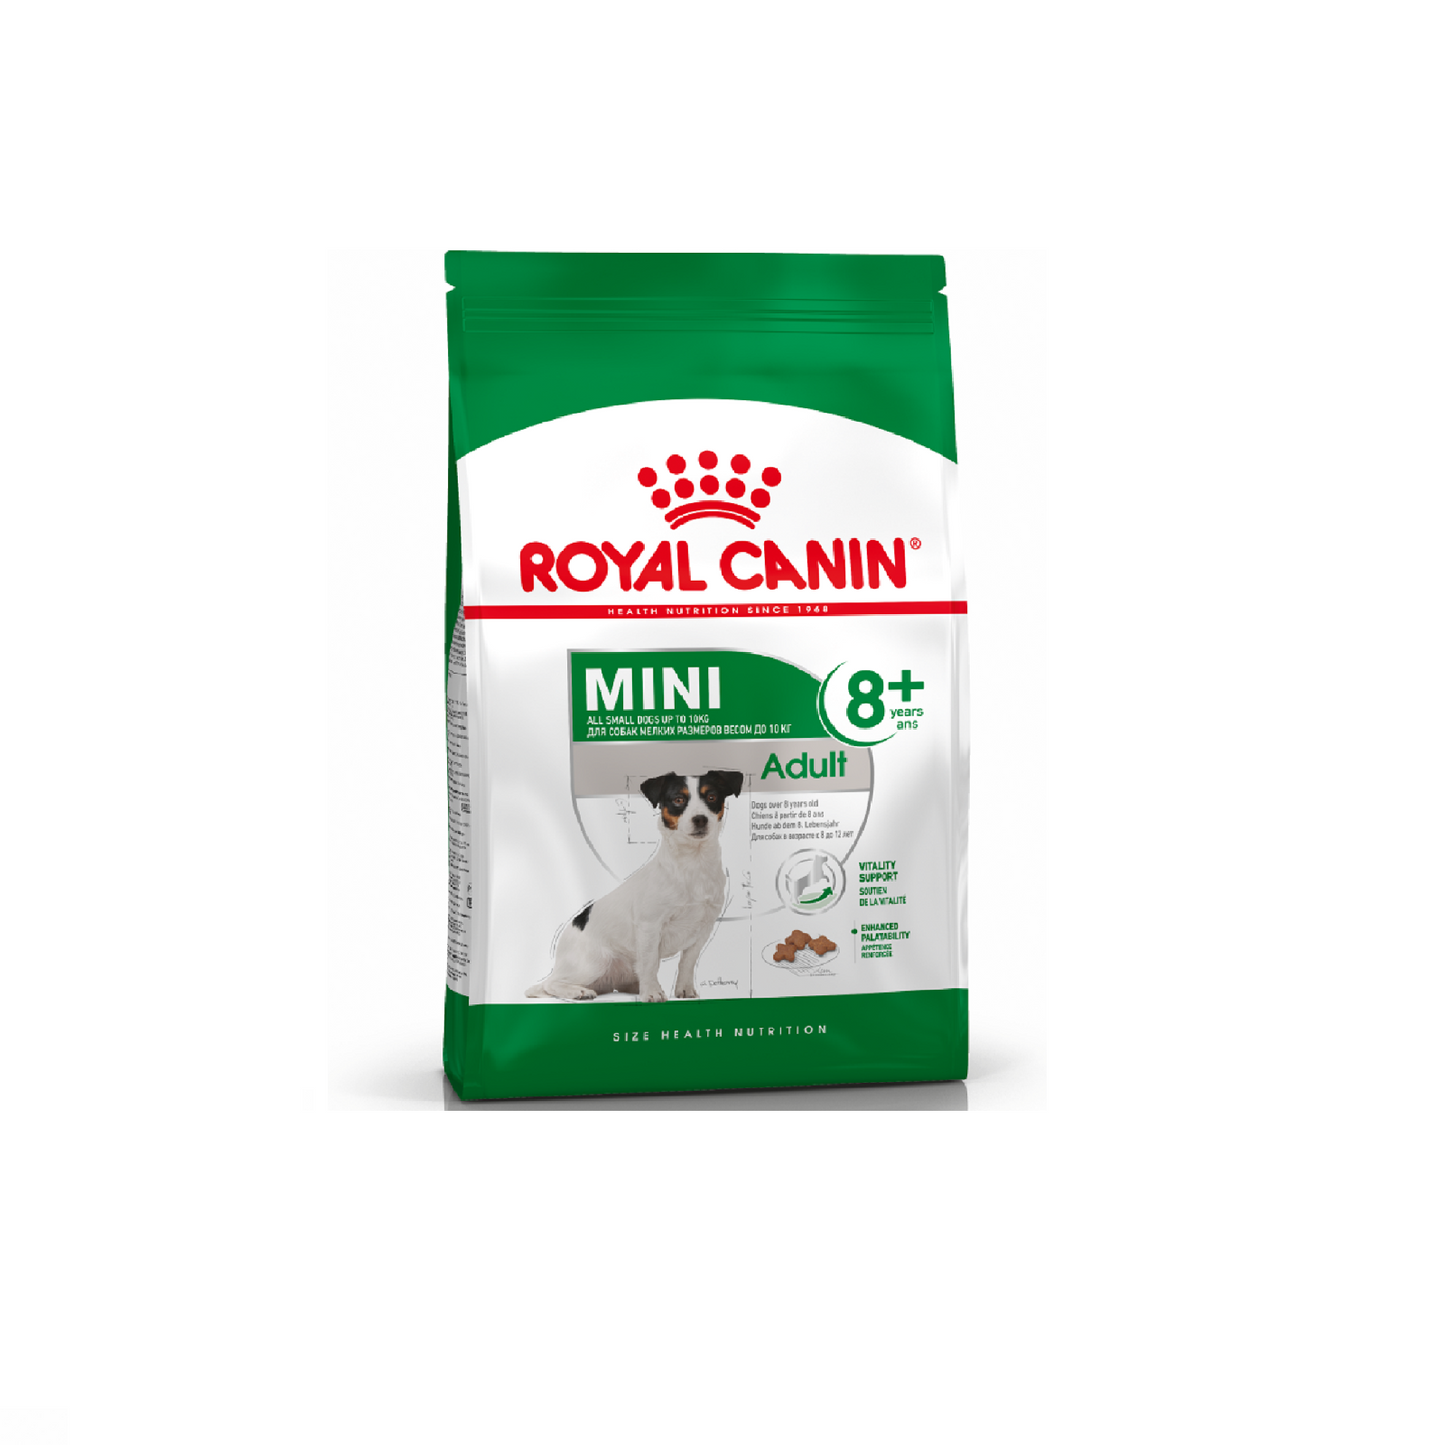 ROYAL CANIN - Mini Adult 8+